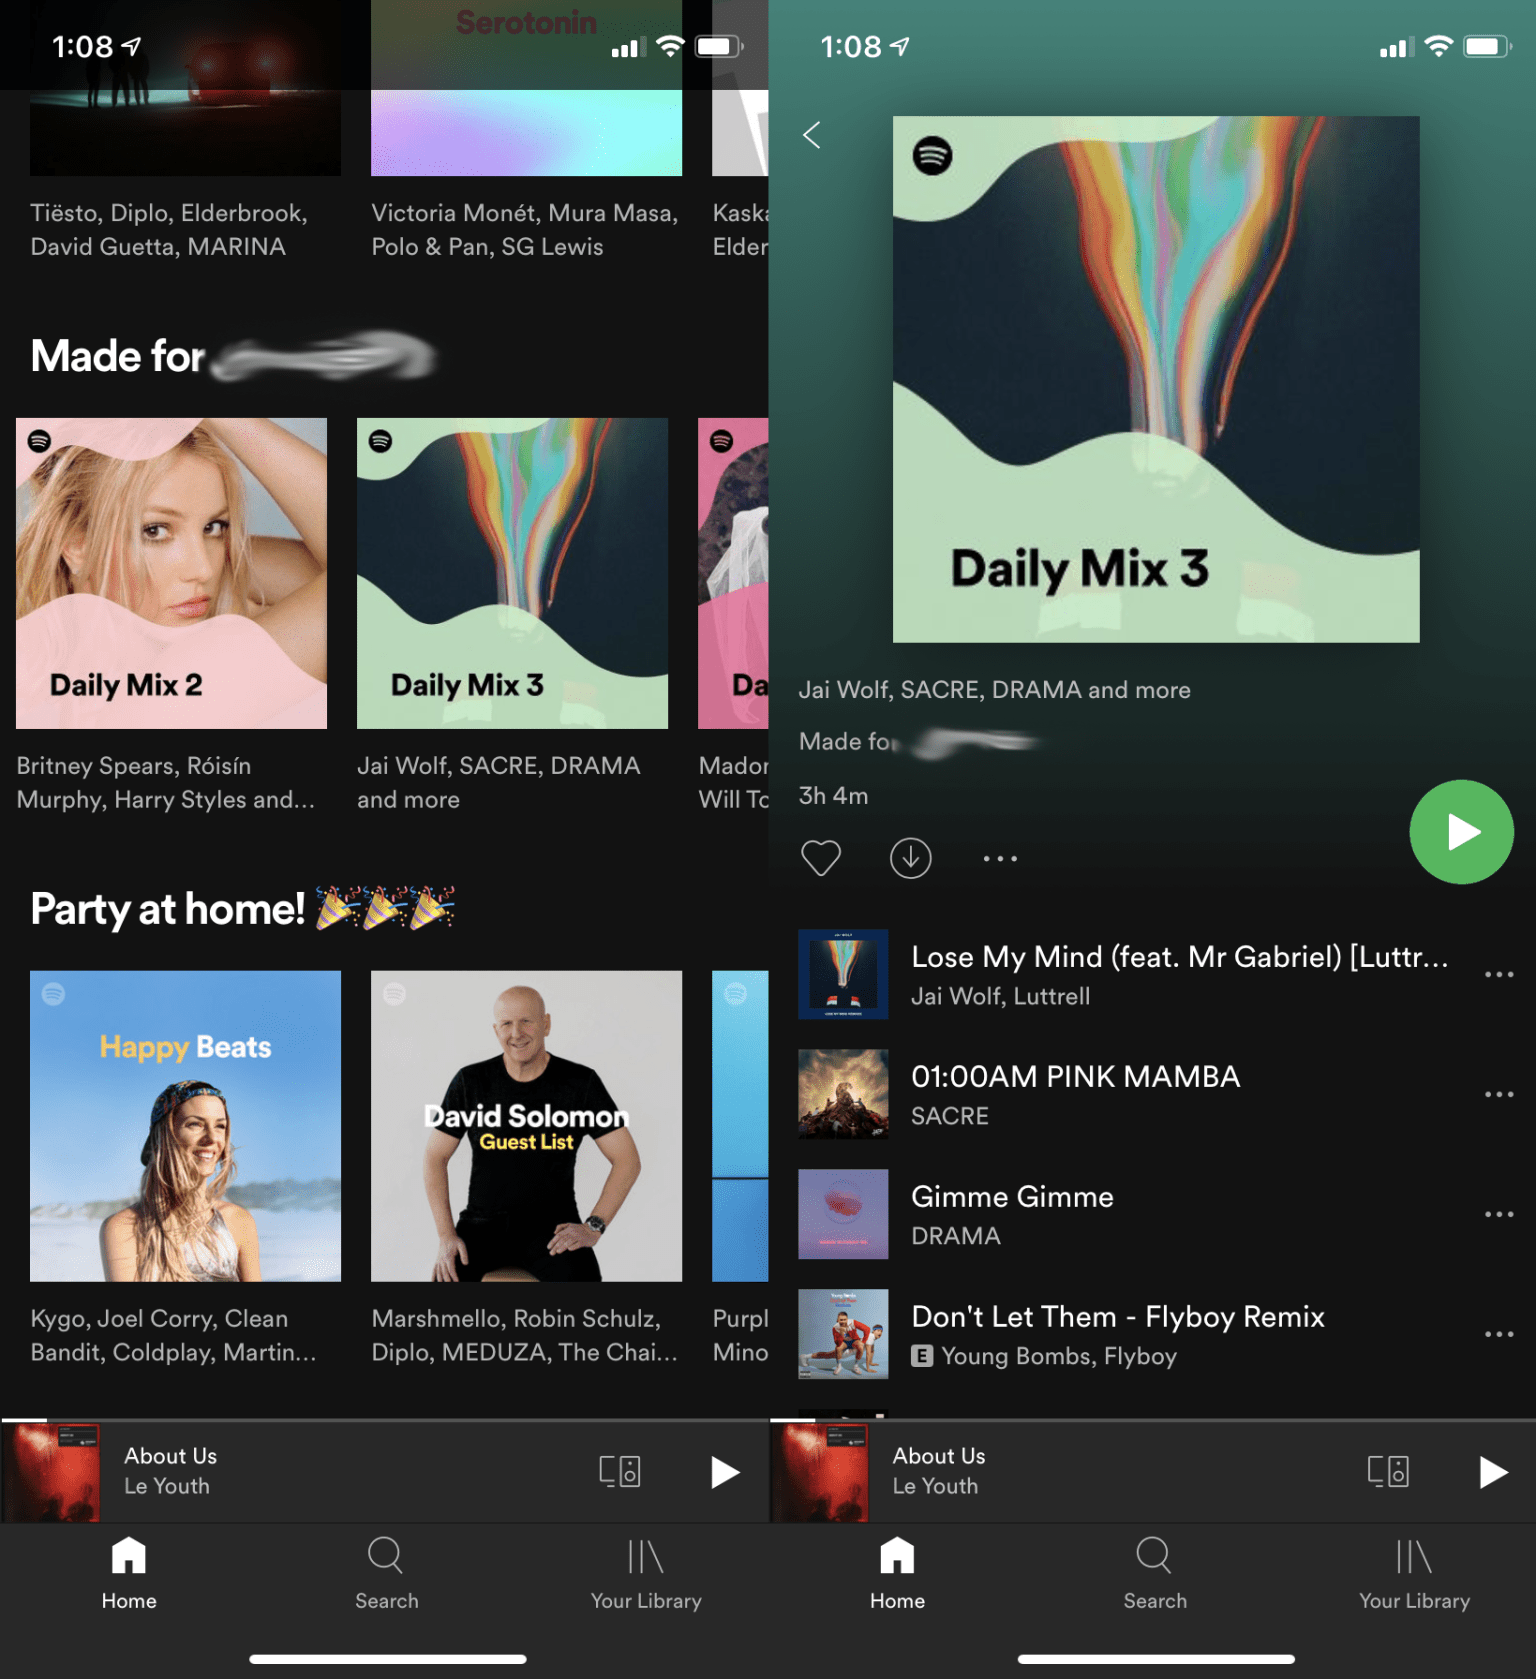 Daily Mix on Spotify